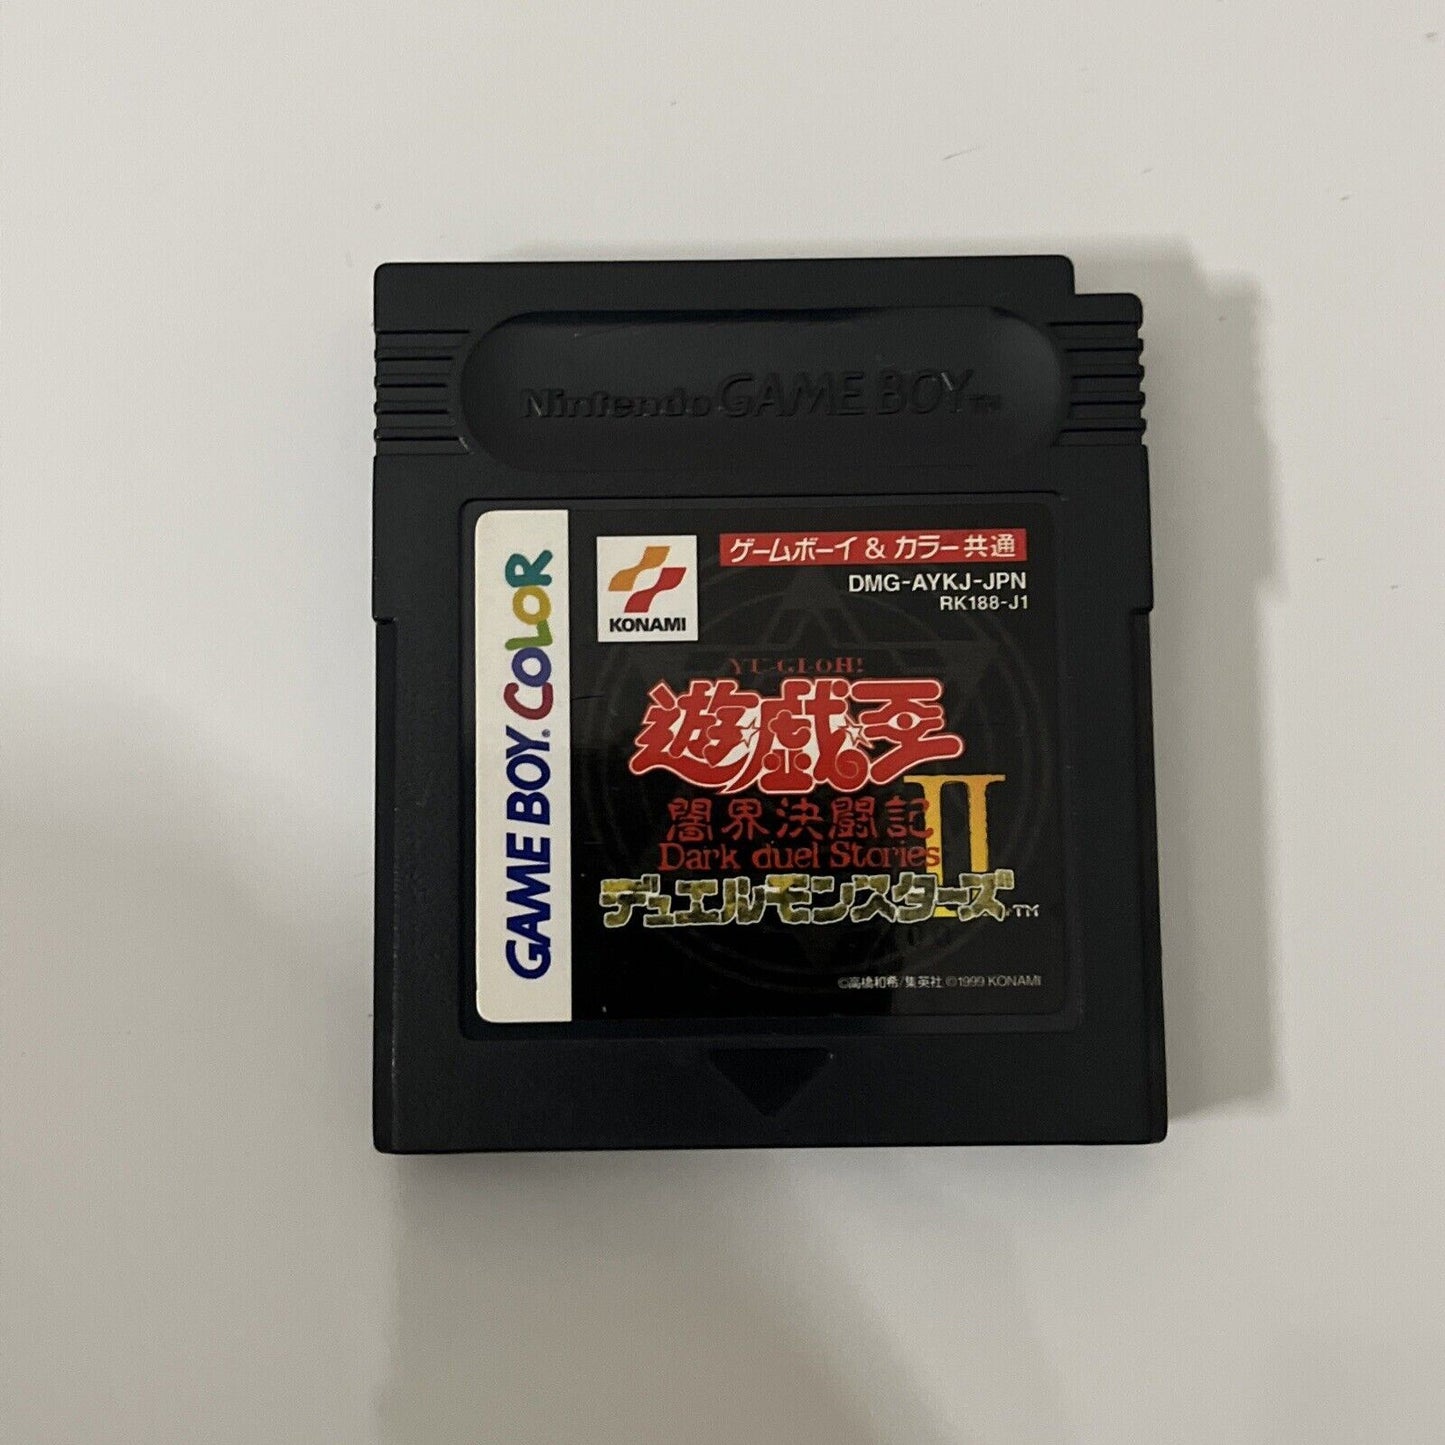 Yu-Gi-Oh 1,2,3,4 - Nintendo Gameboy Color GBC JAPAN Game